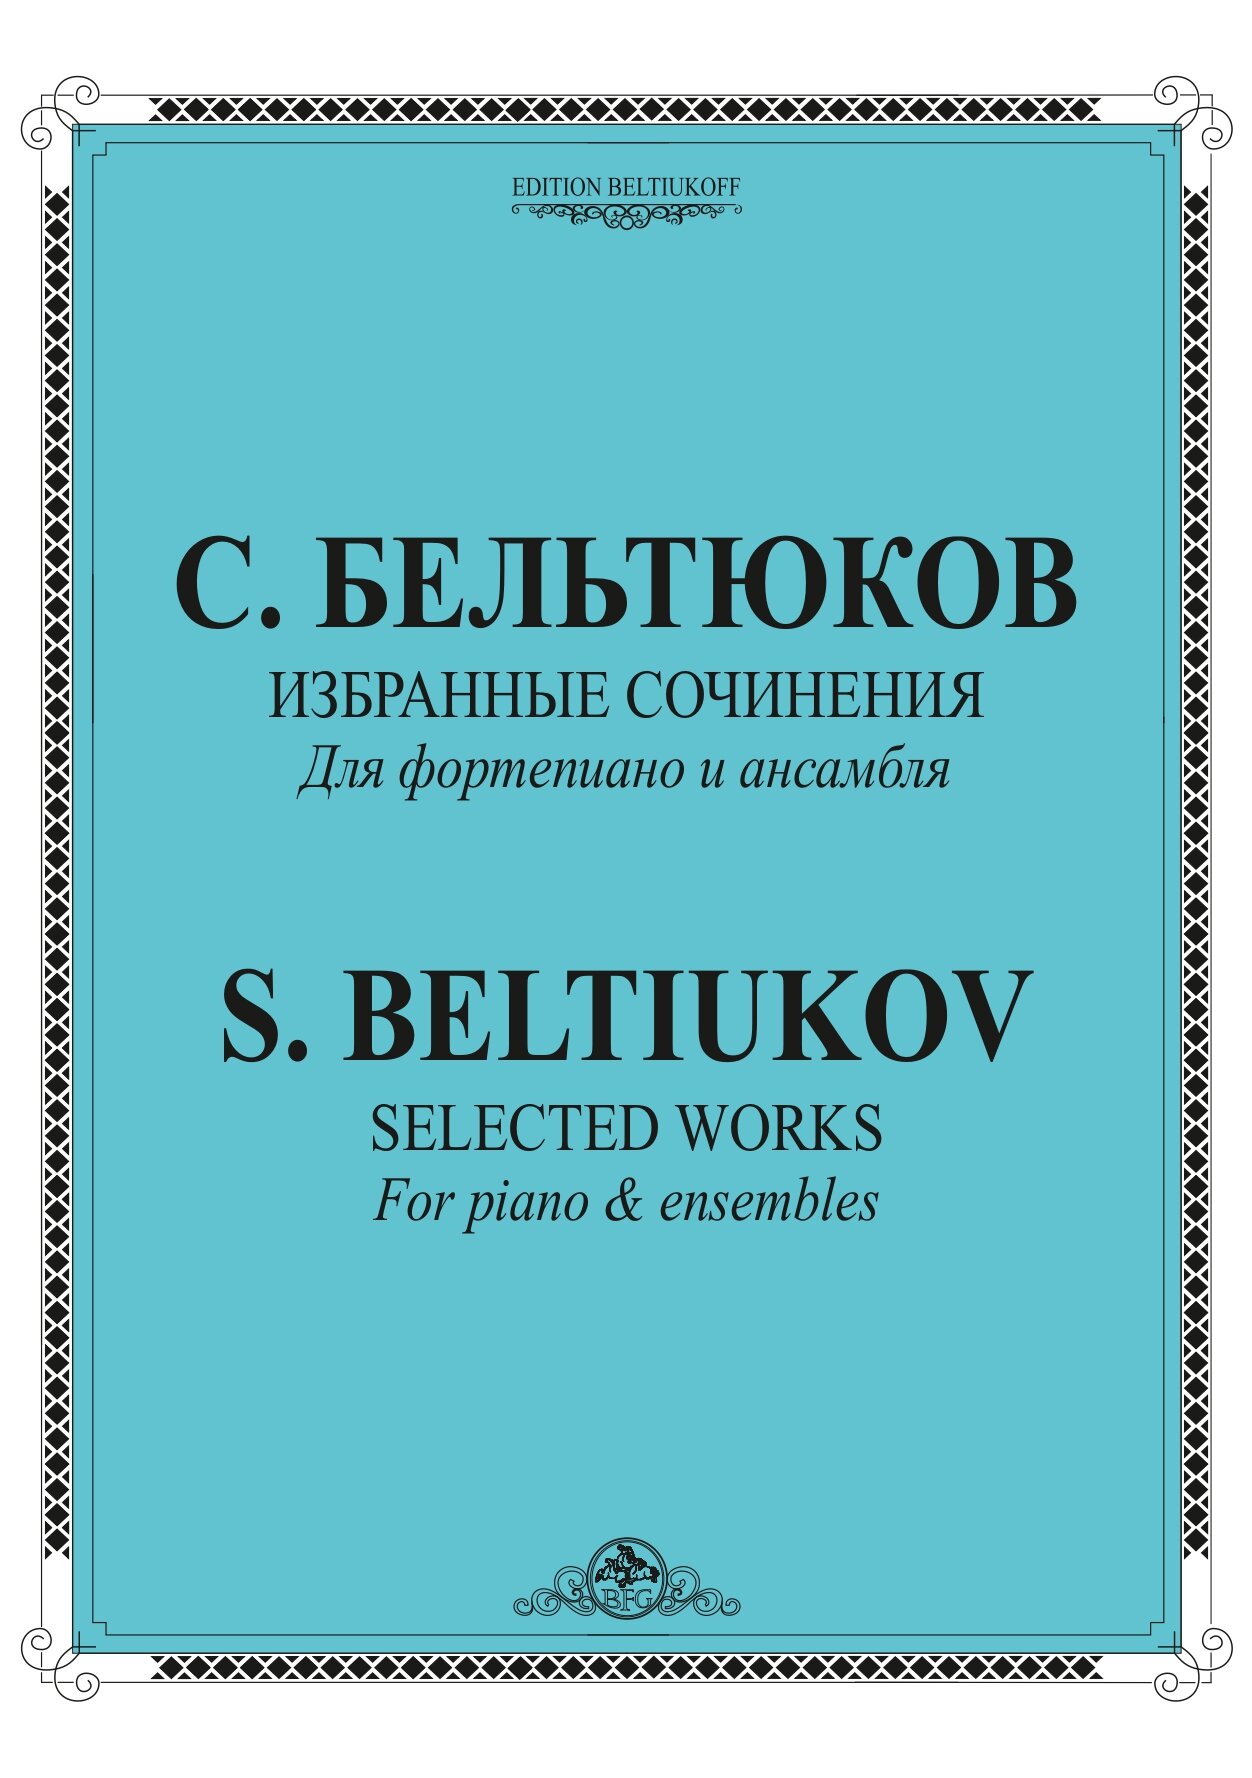 Sergey Beltiukov Selected works for ensembles.jpg